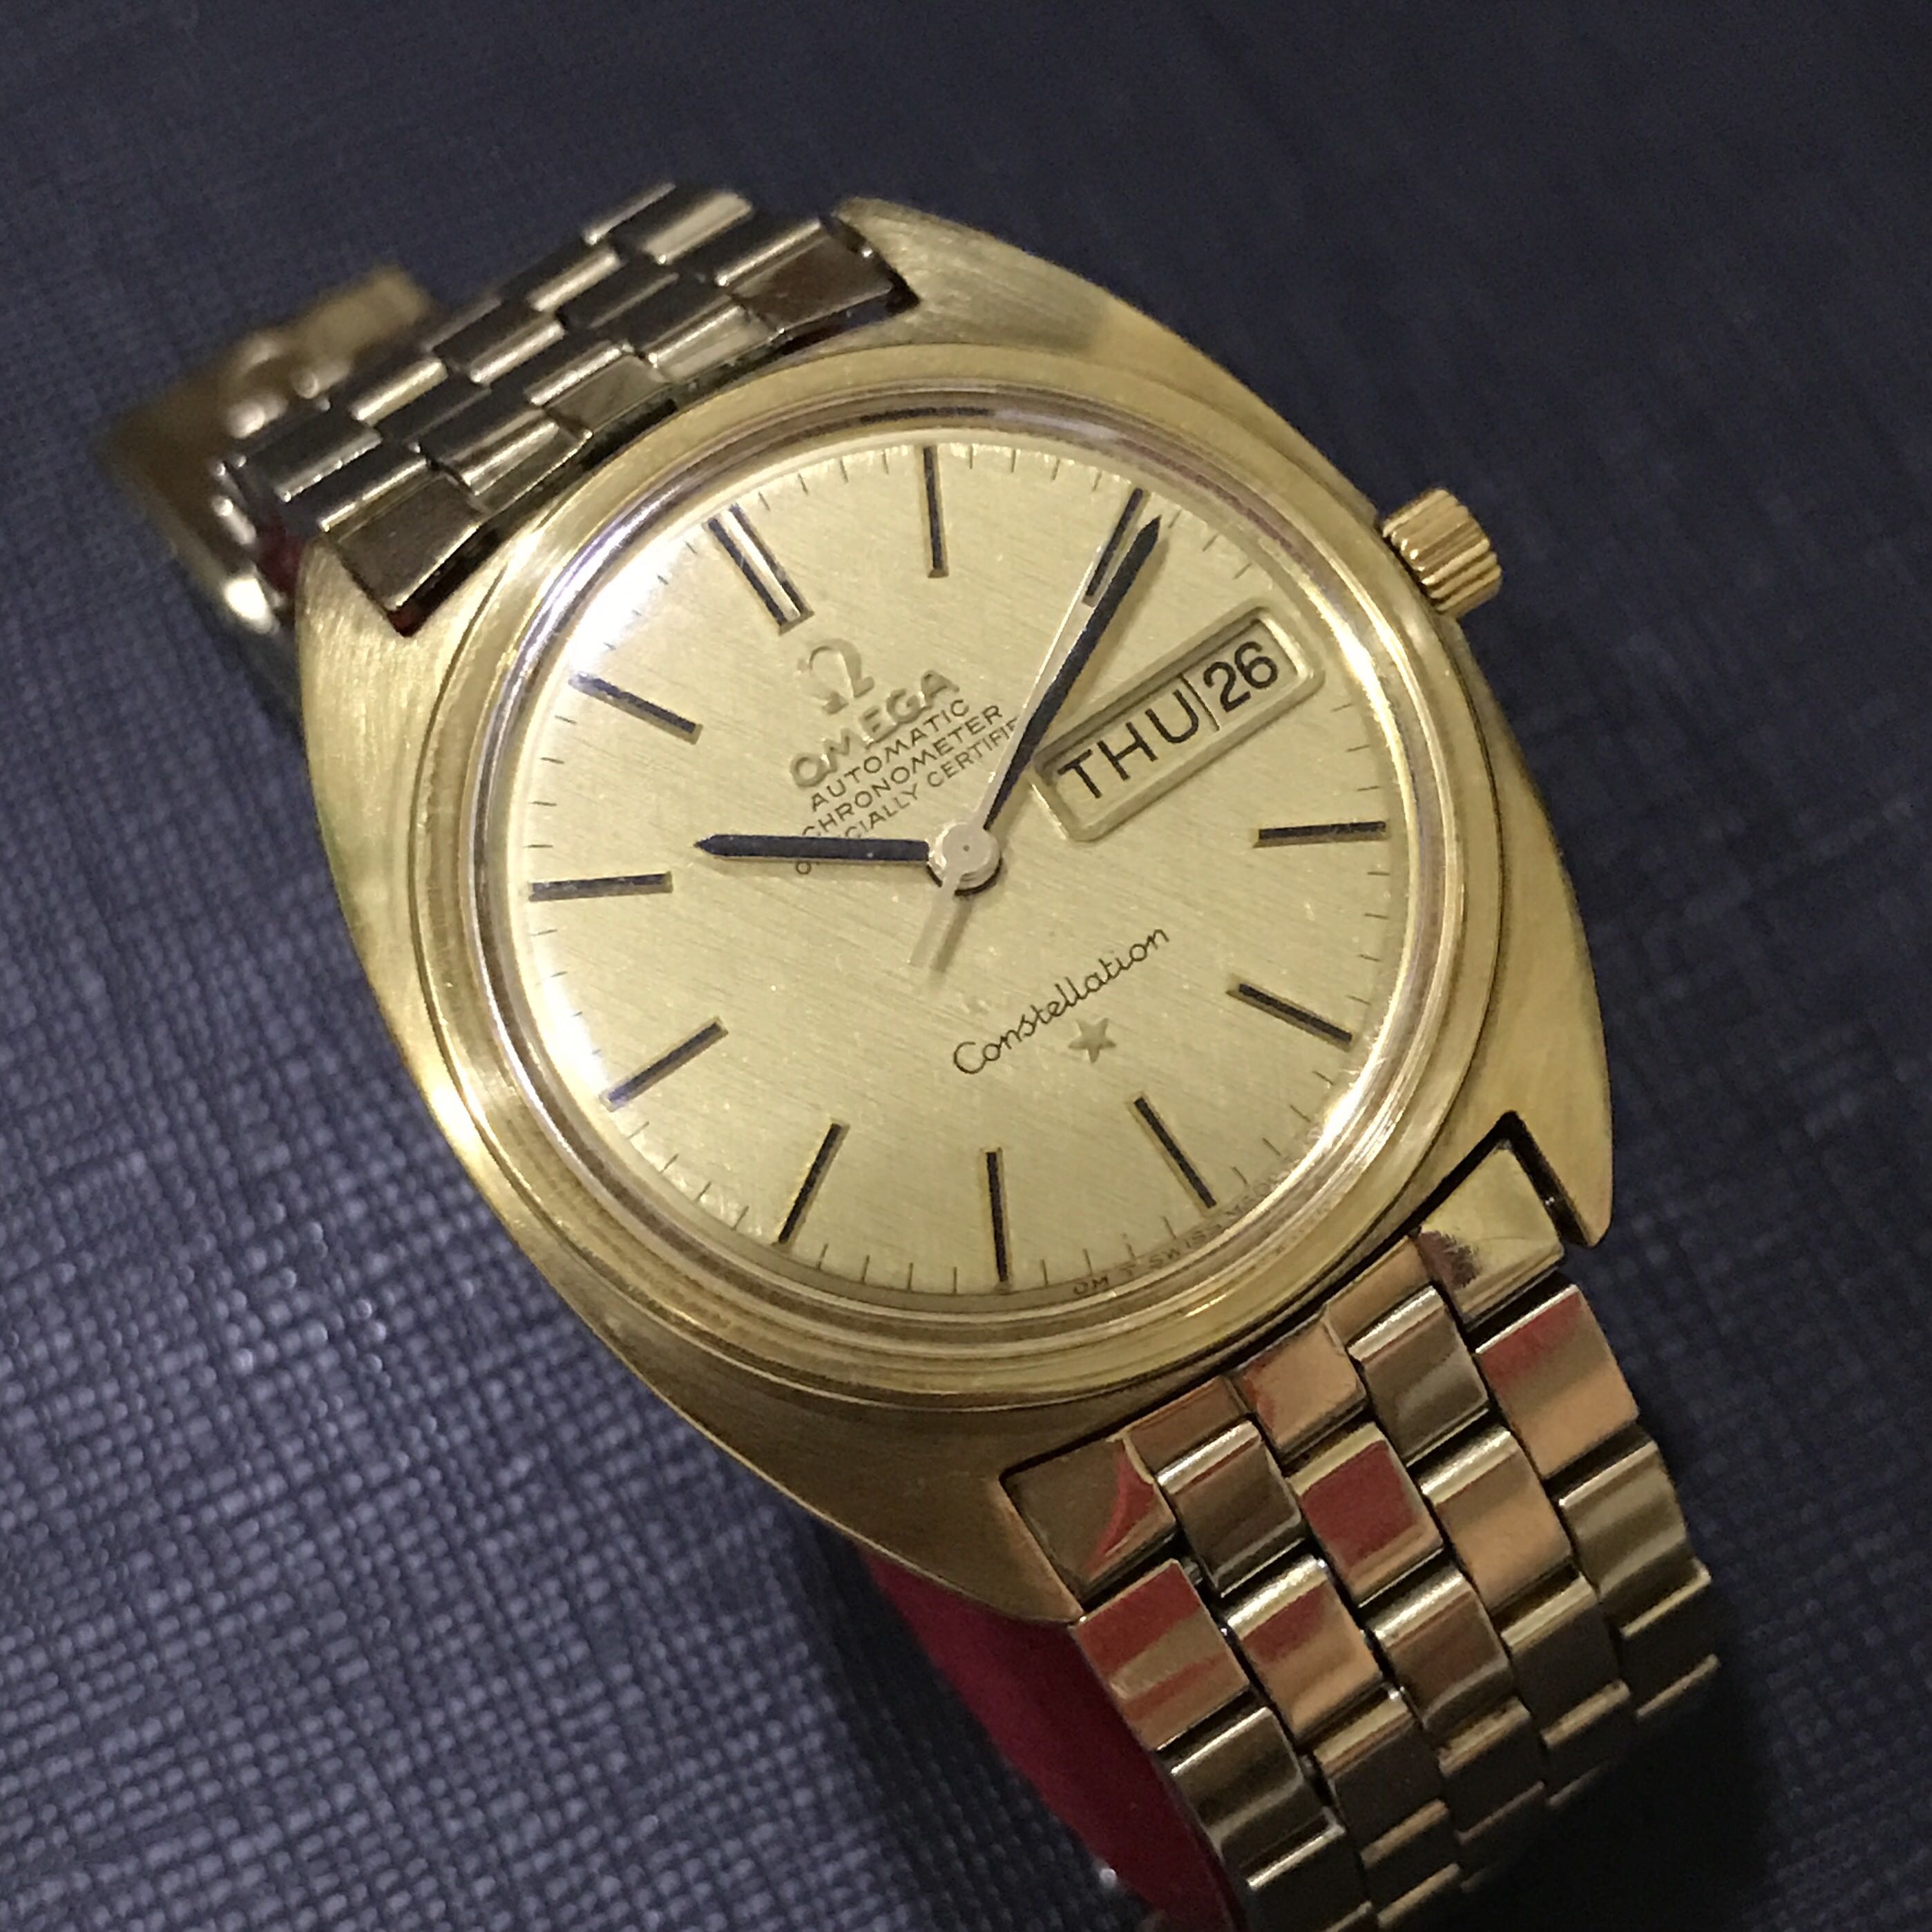 vintage omega constellation watch